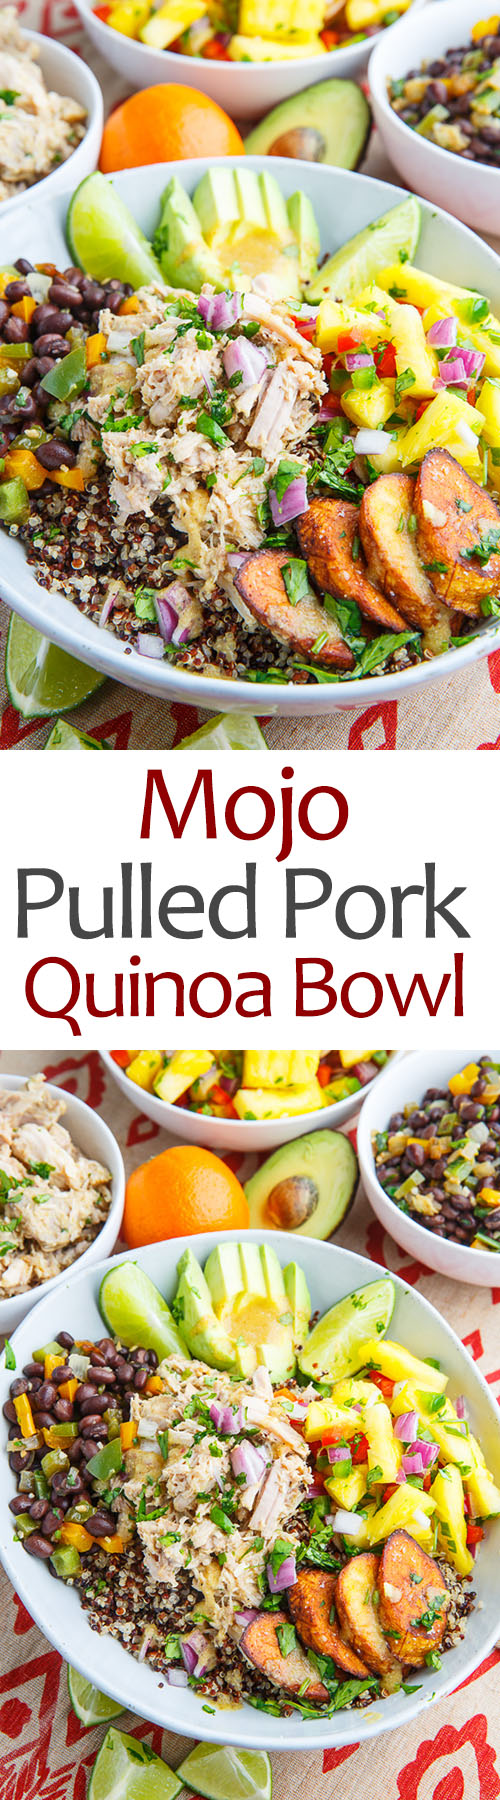 Cuban Mojo Pulled Pork Quinoa Bowls with Pineapple Salsa